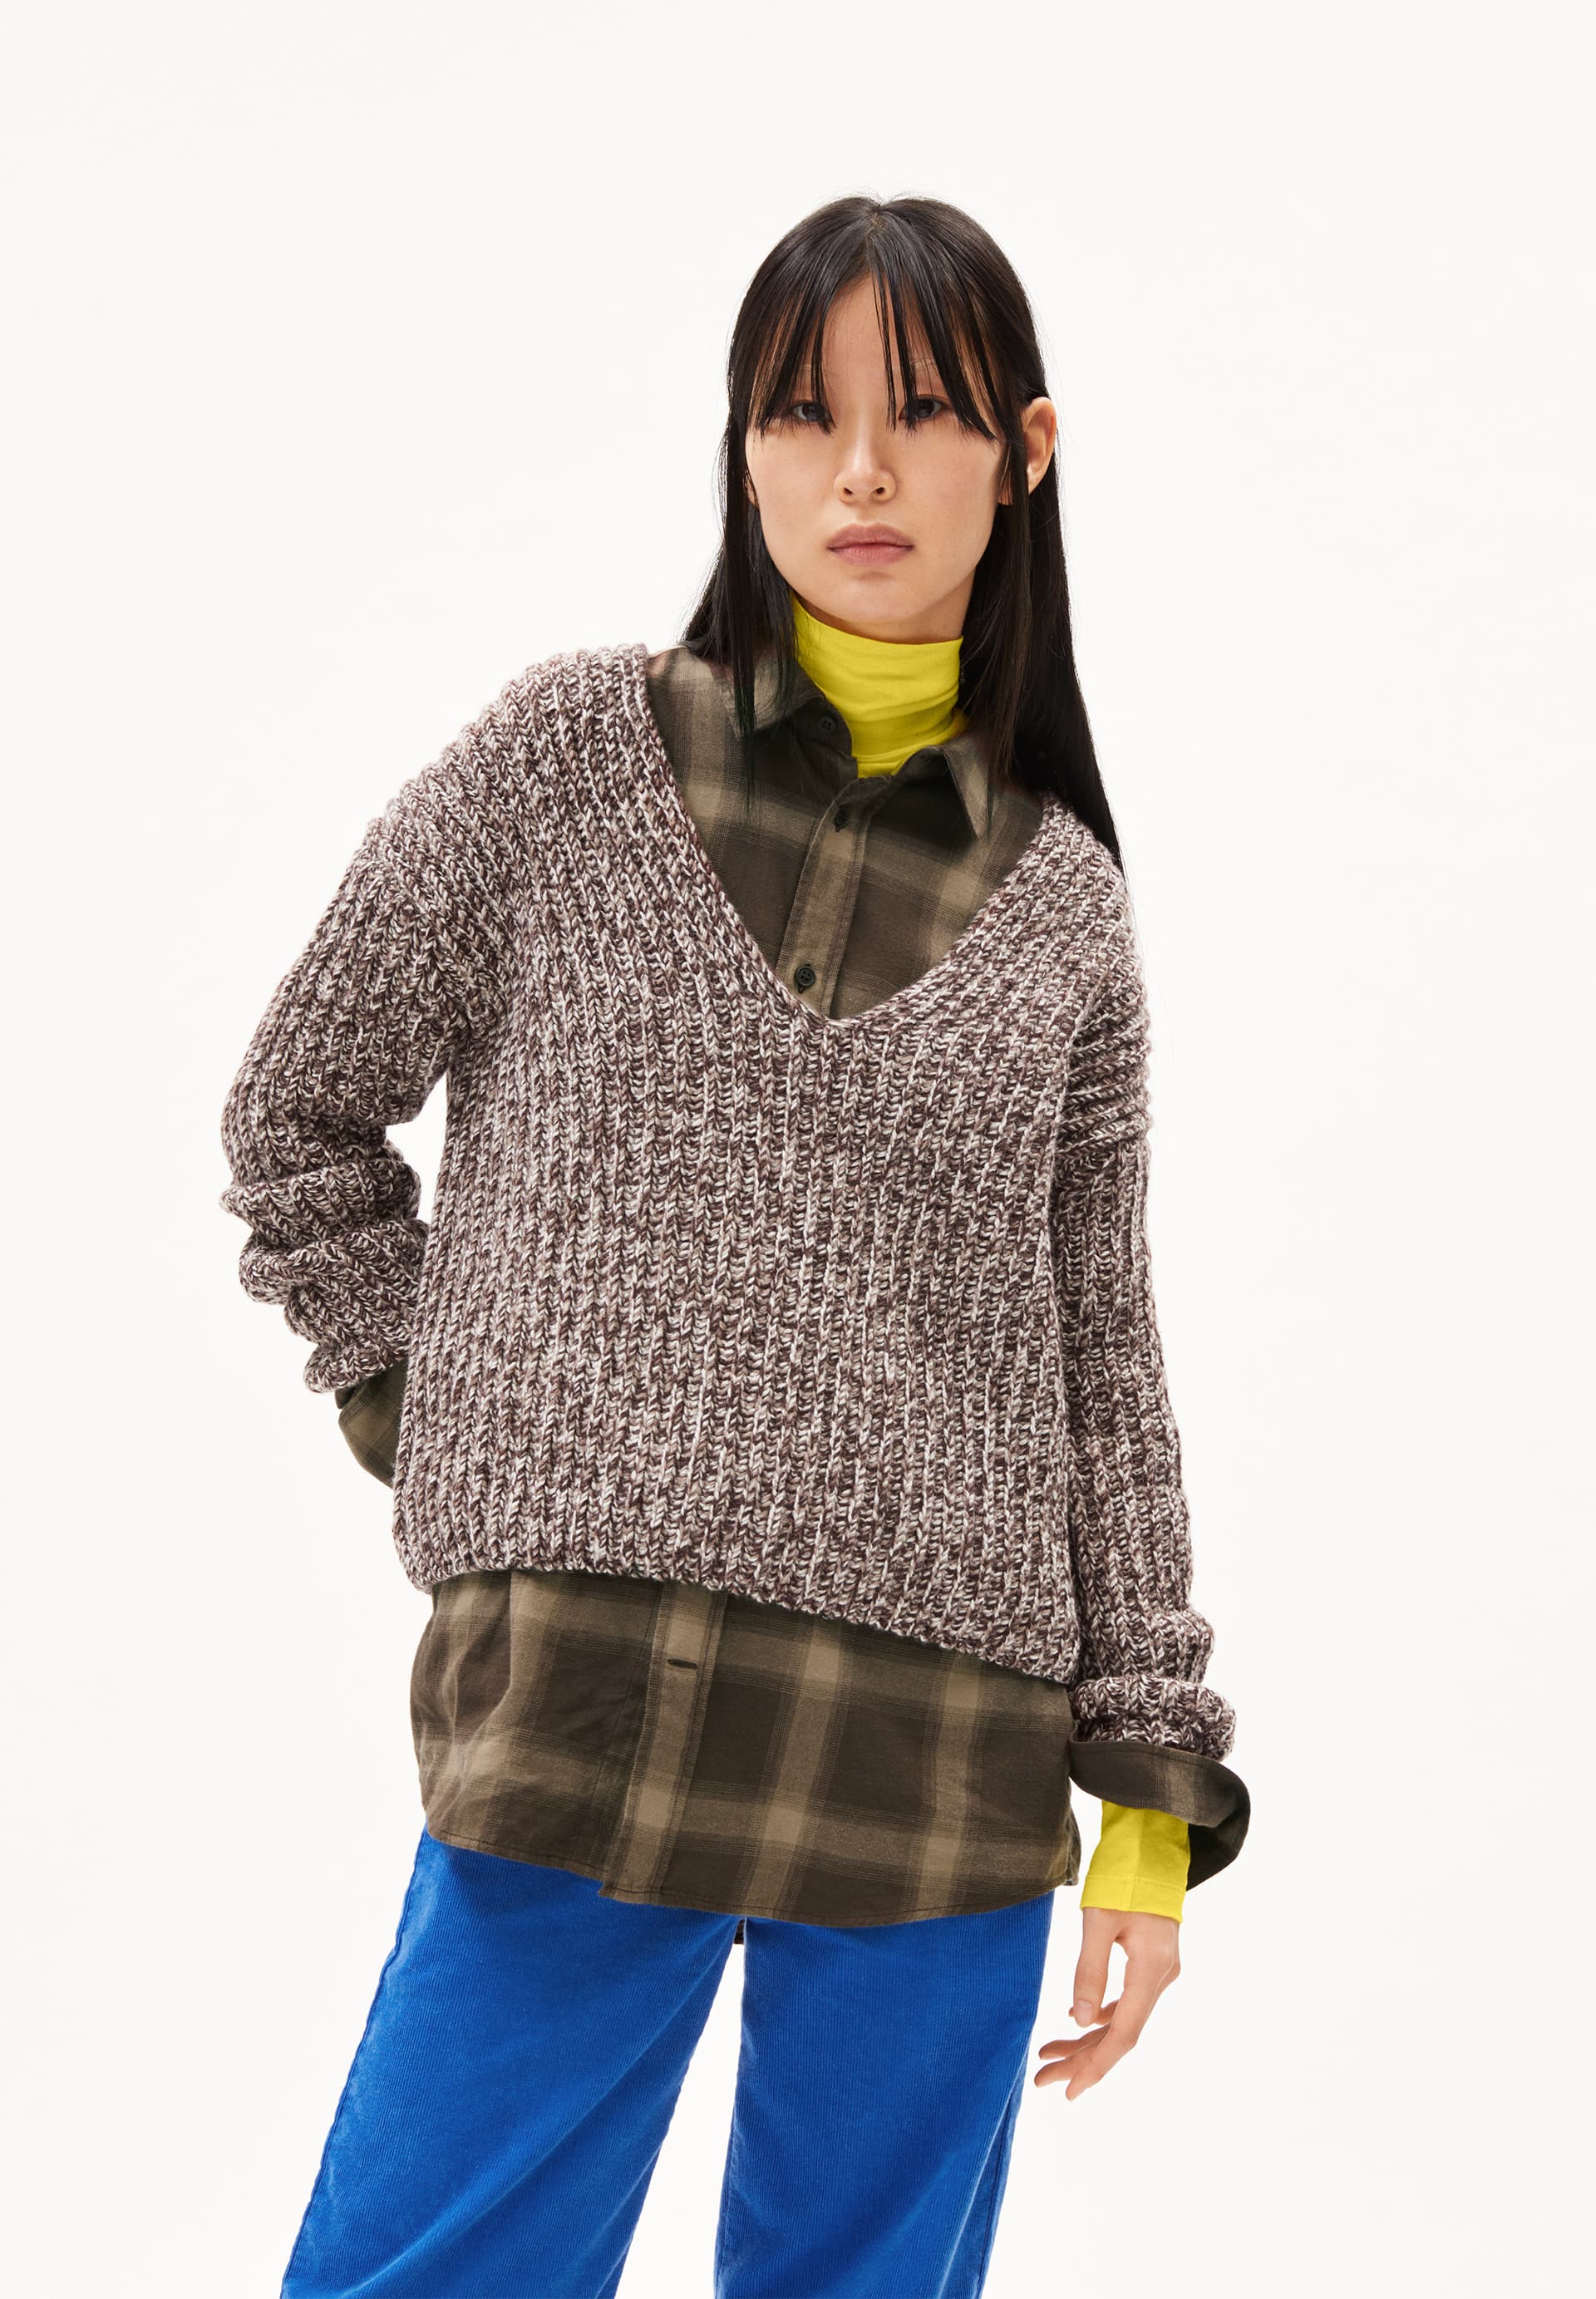 SAKIAA LEOPARD Knit Sweater Oversized Fit made of Organic Wool Mix